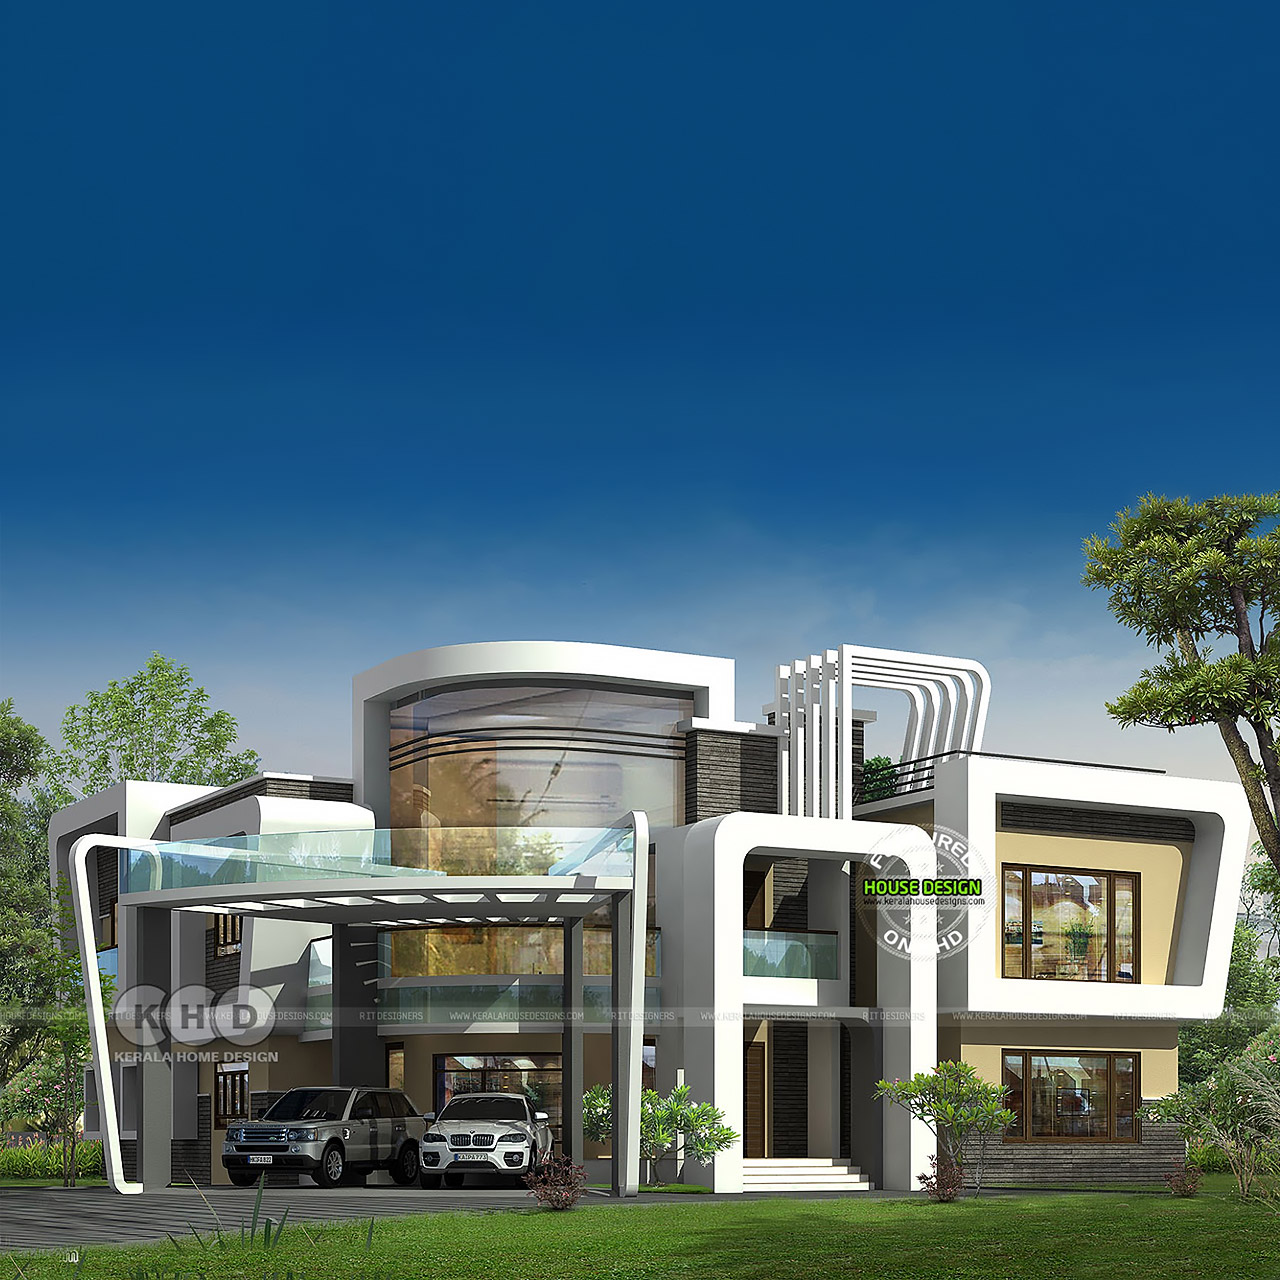 Kerala Home Design - Khd On X: 